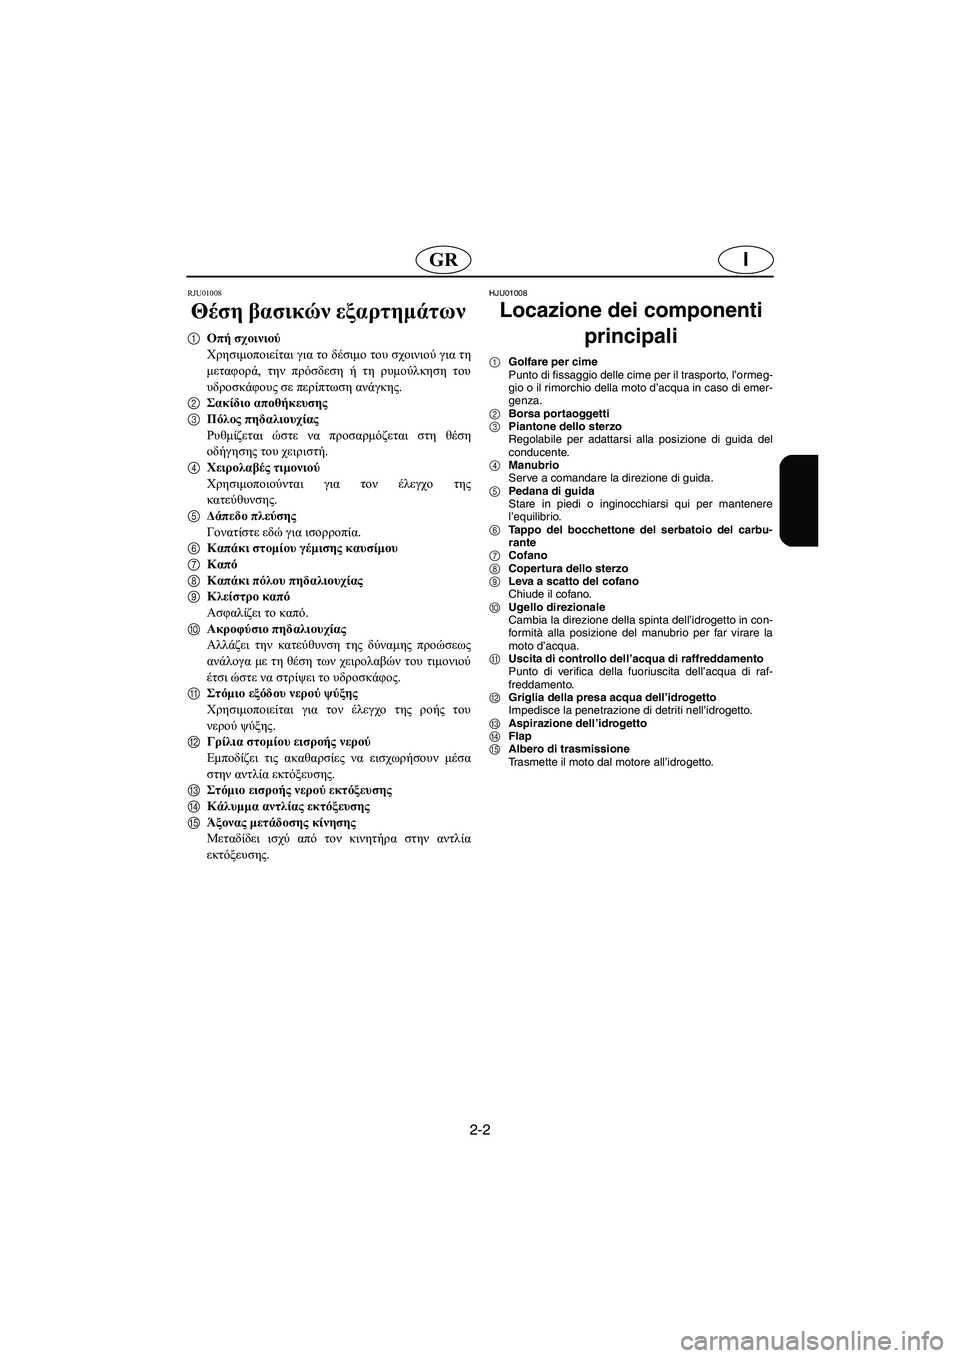 YAMAHA SUPERJET 2005  Manual de utilização (in Portuguese) 2-2
IGR
RJU01008 
Θέση βασικών εξαρτημάτων 
1Οπή σχοινιού
Χρησιμοποιείται για το δέσιμο του σχοινιού για τη
μεταφορά,